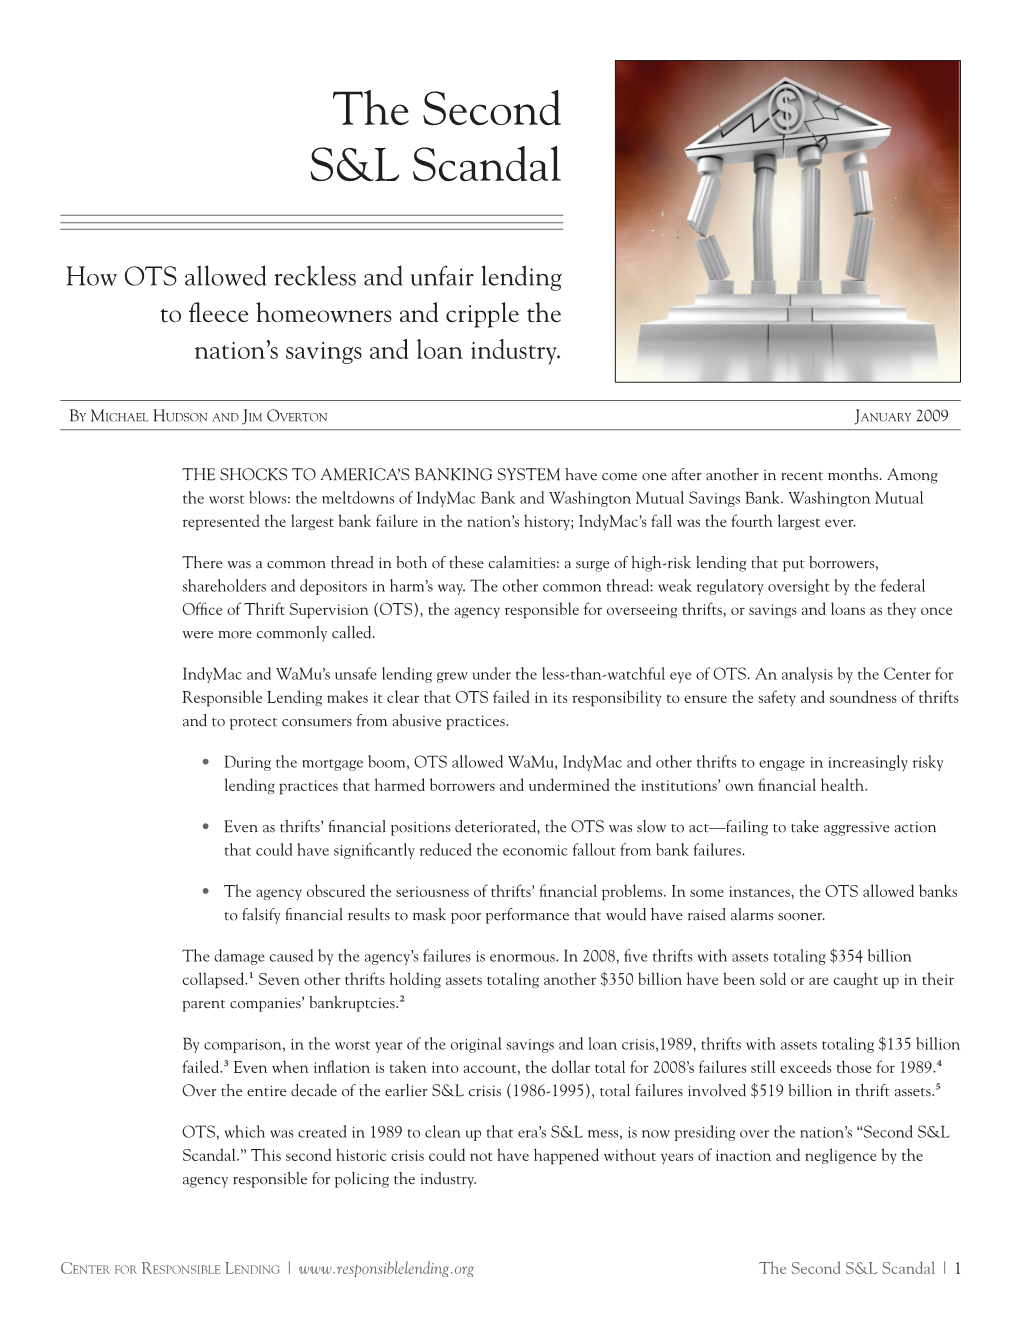 CRL SL Article.Indd